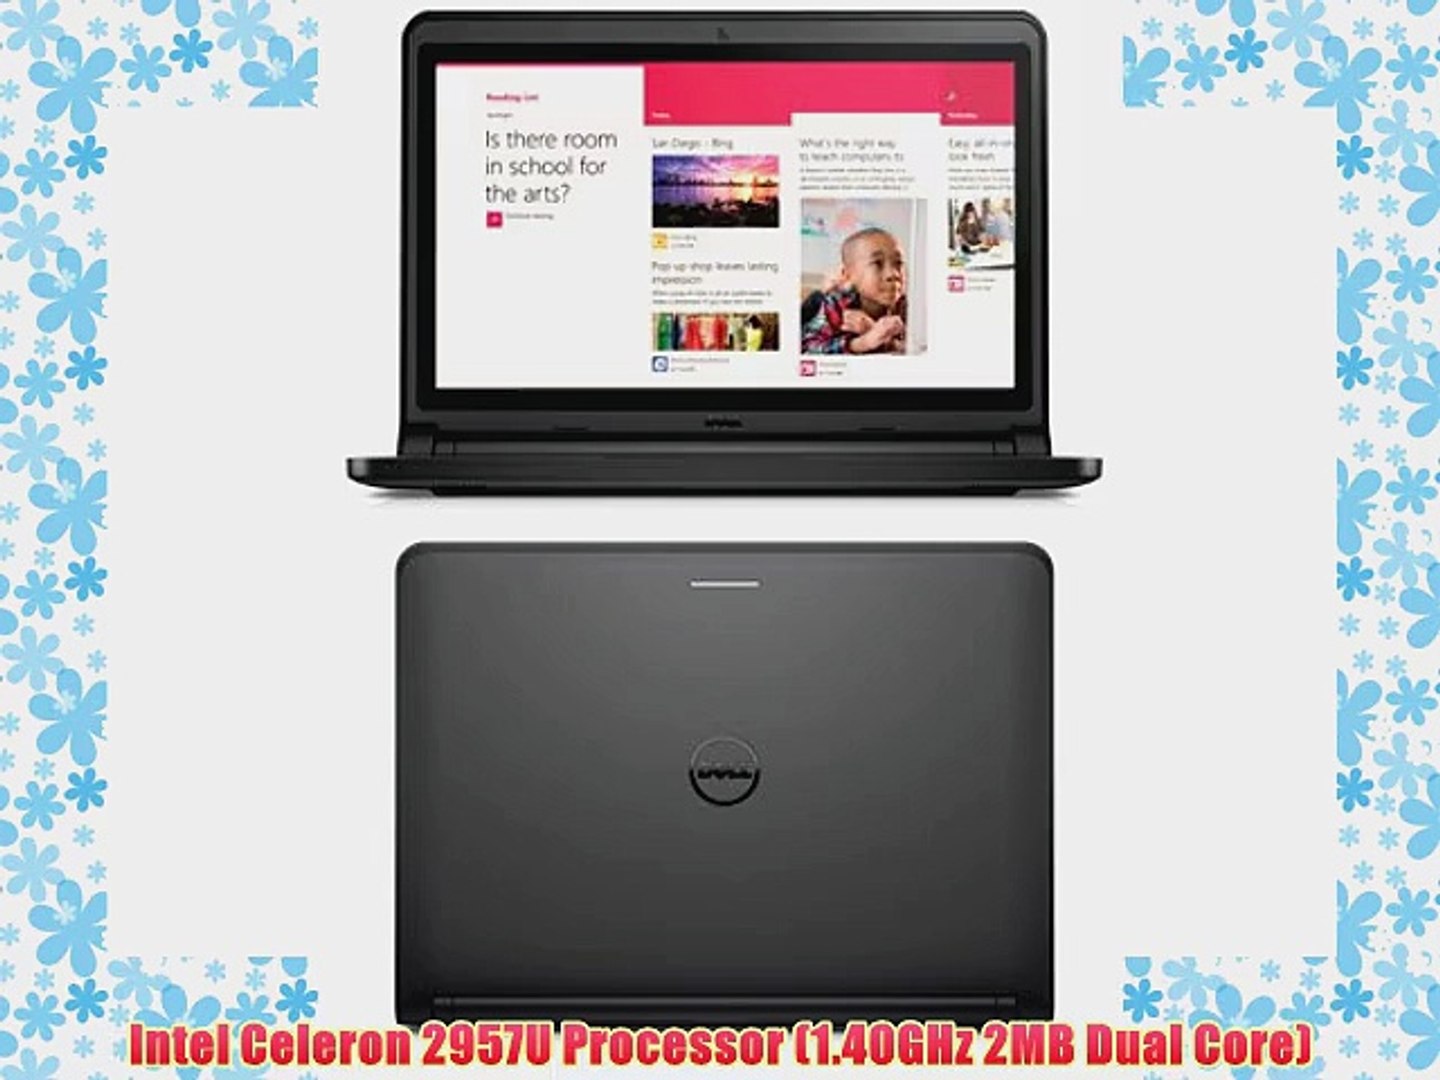 Dell Latitude 3340 13.3 Inch LED Business Laptop Intel Celeron 2957U  Processor (1.40GHz 2MB - video Dailymotion